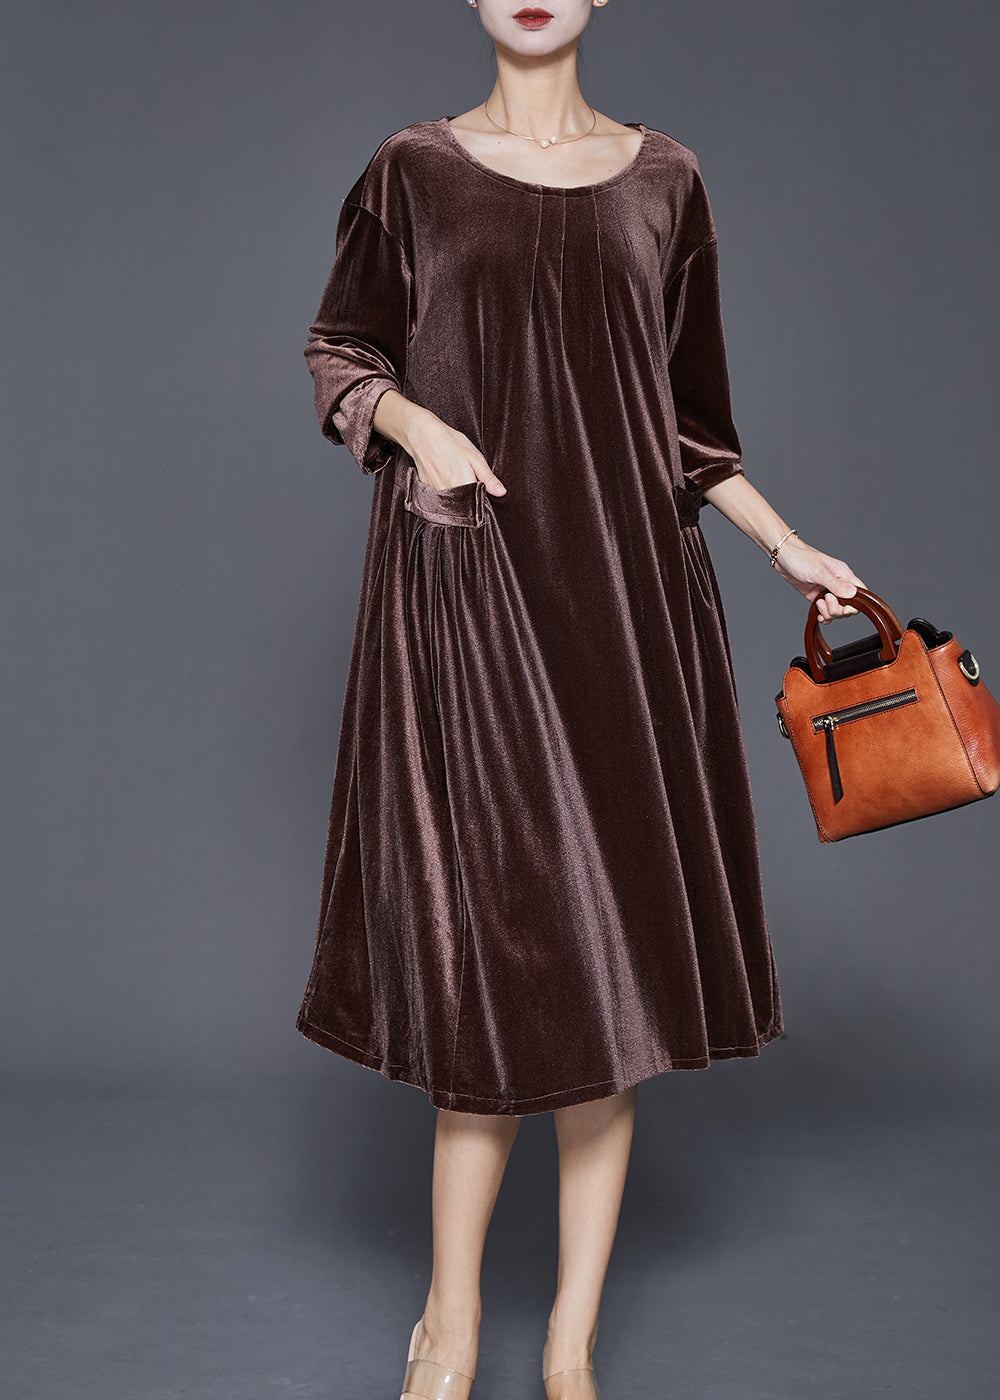 Chocolate Silk Velour Mid Dresses Oversized Pockets Fall